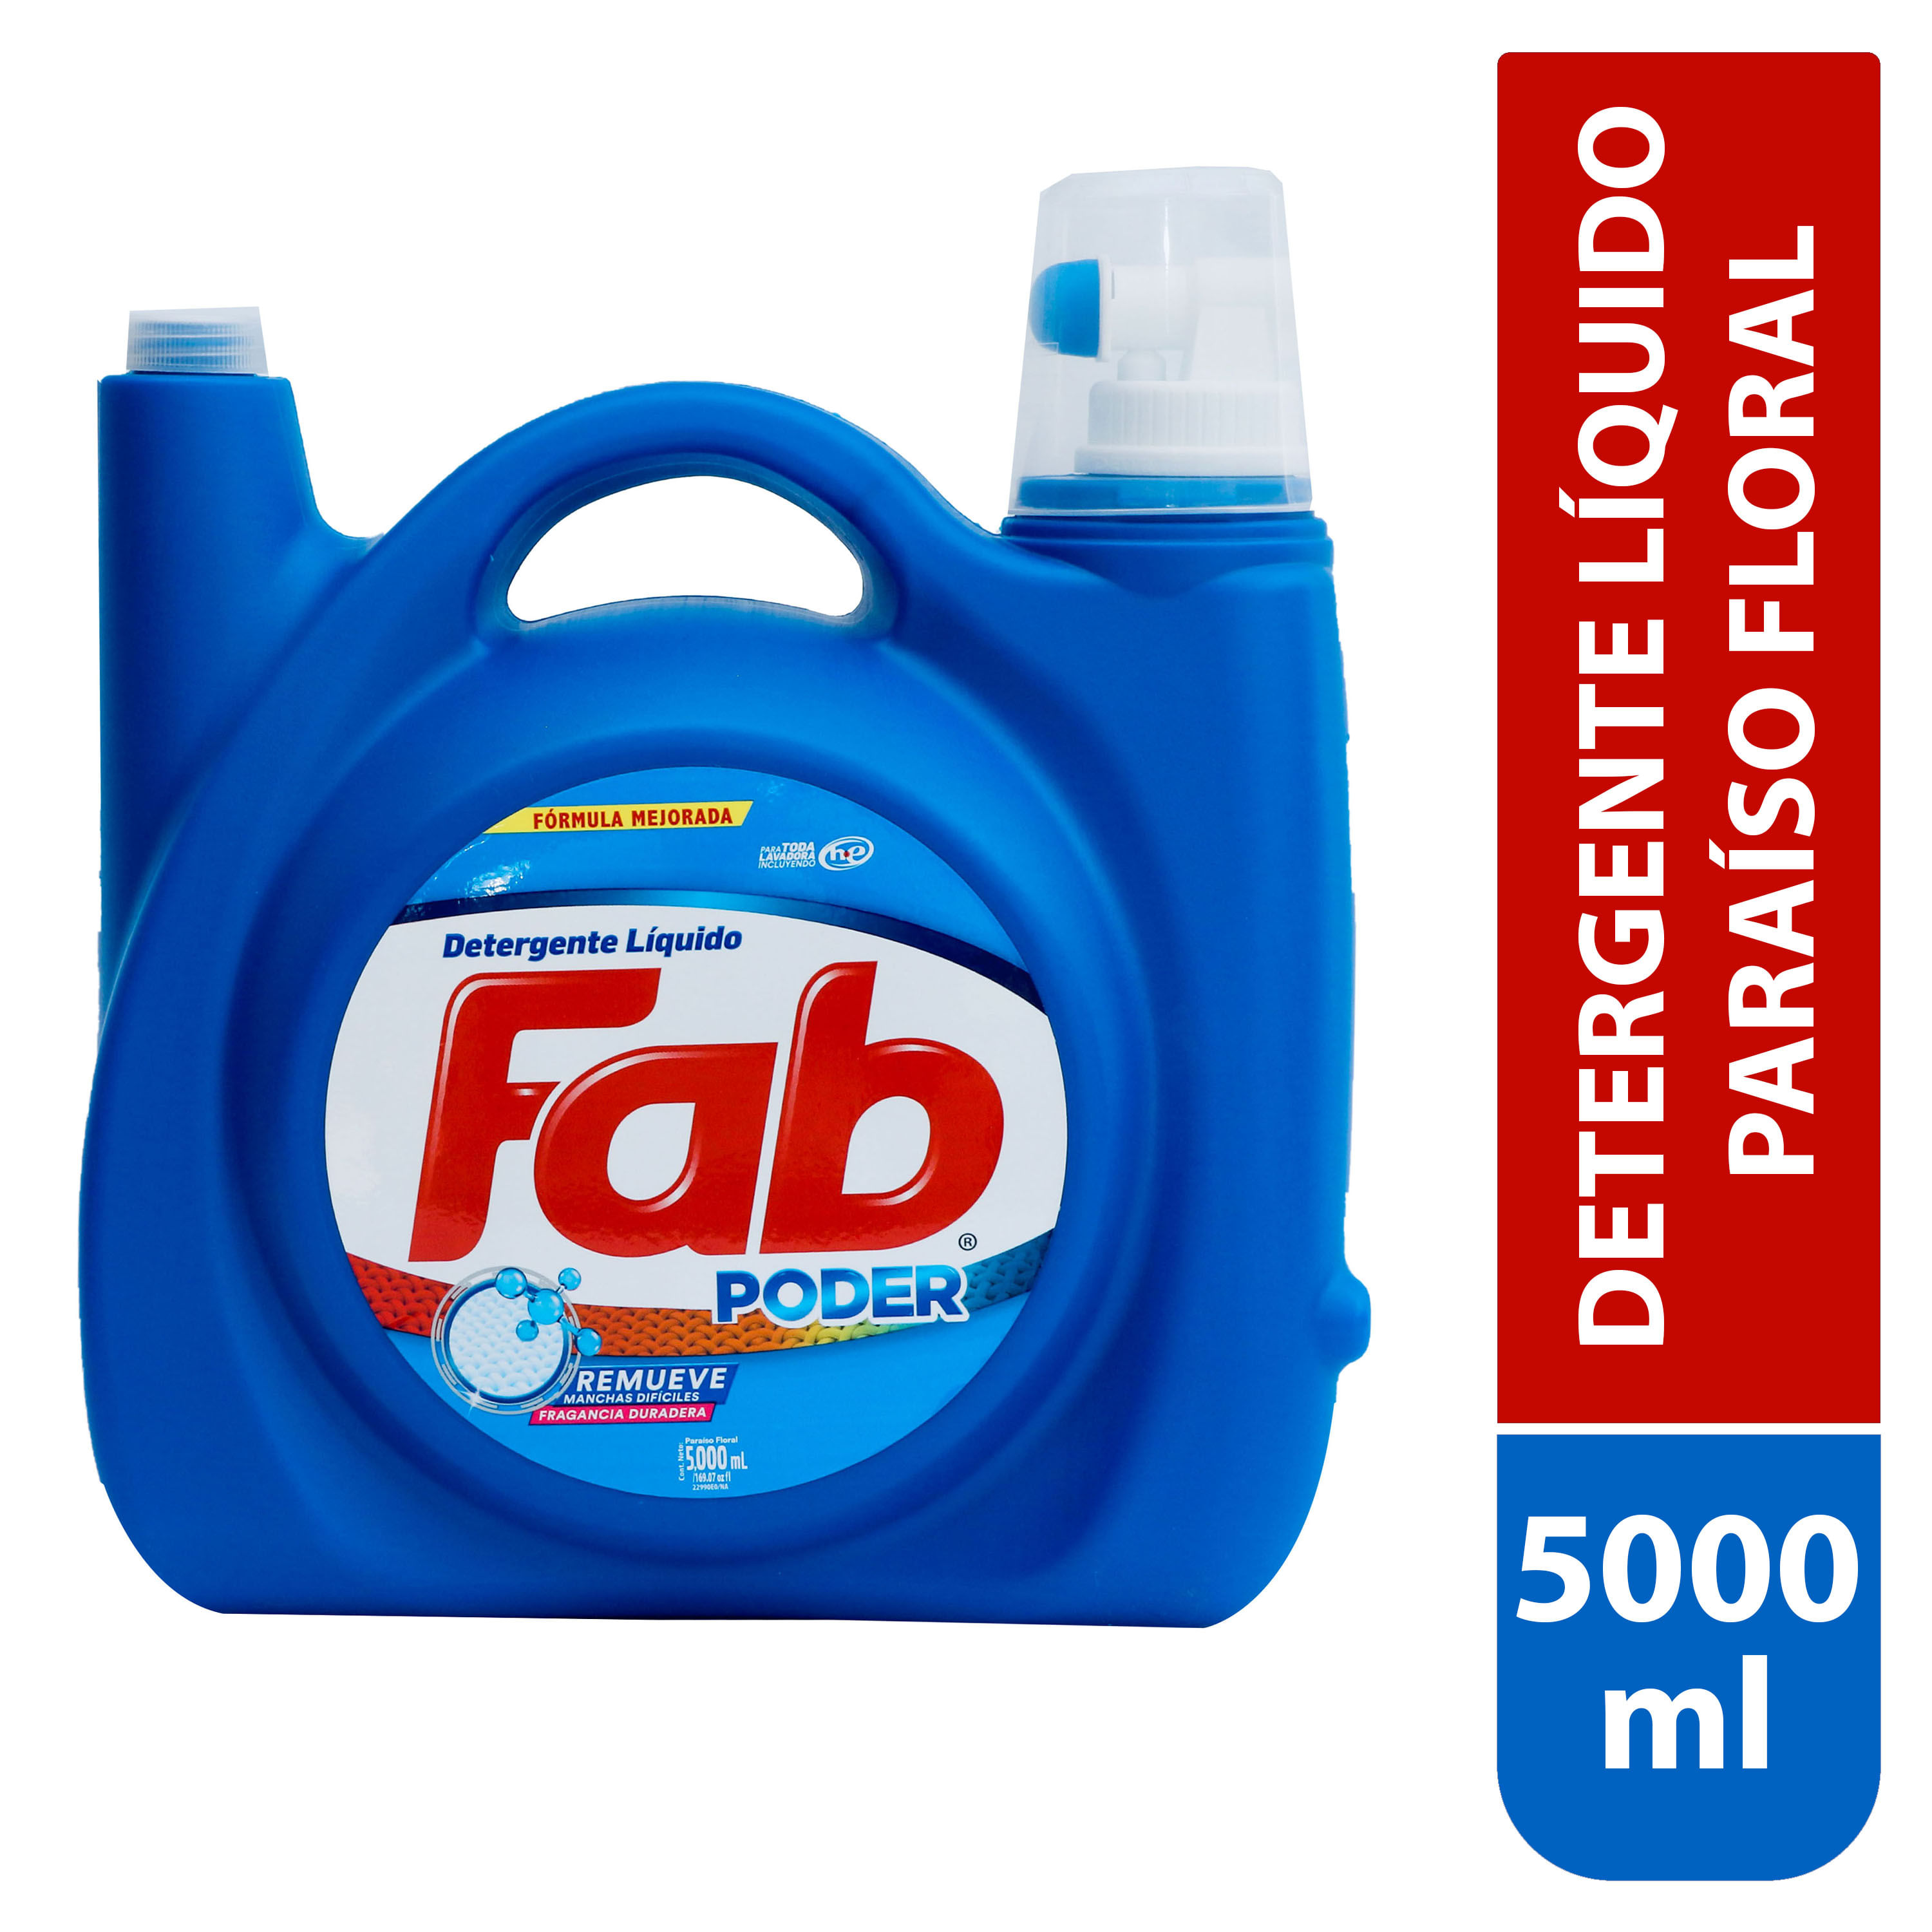 Detergente-L-quido-Fab-para-so-floral-5000ml-1-32370